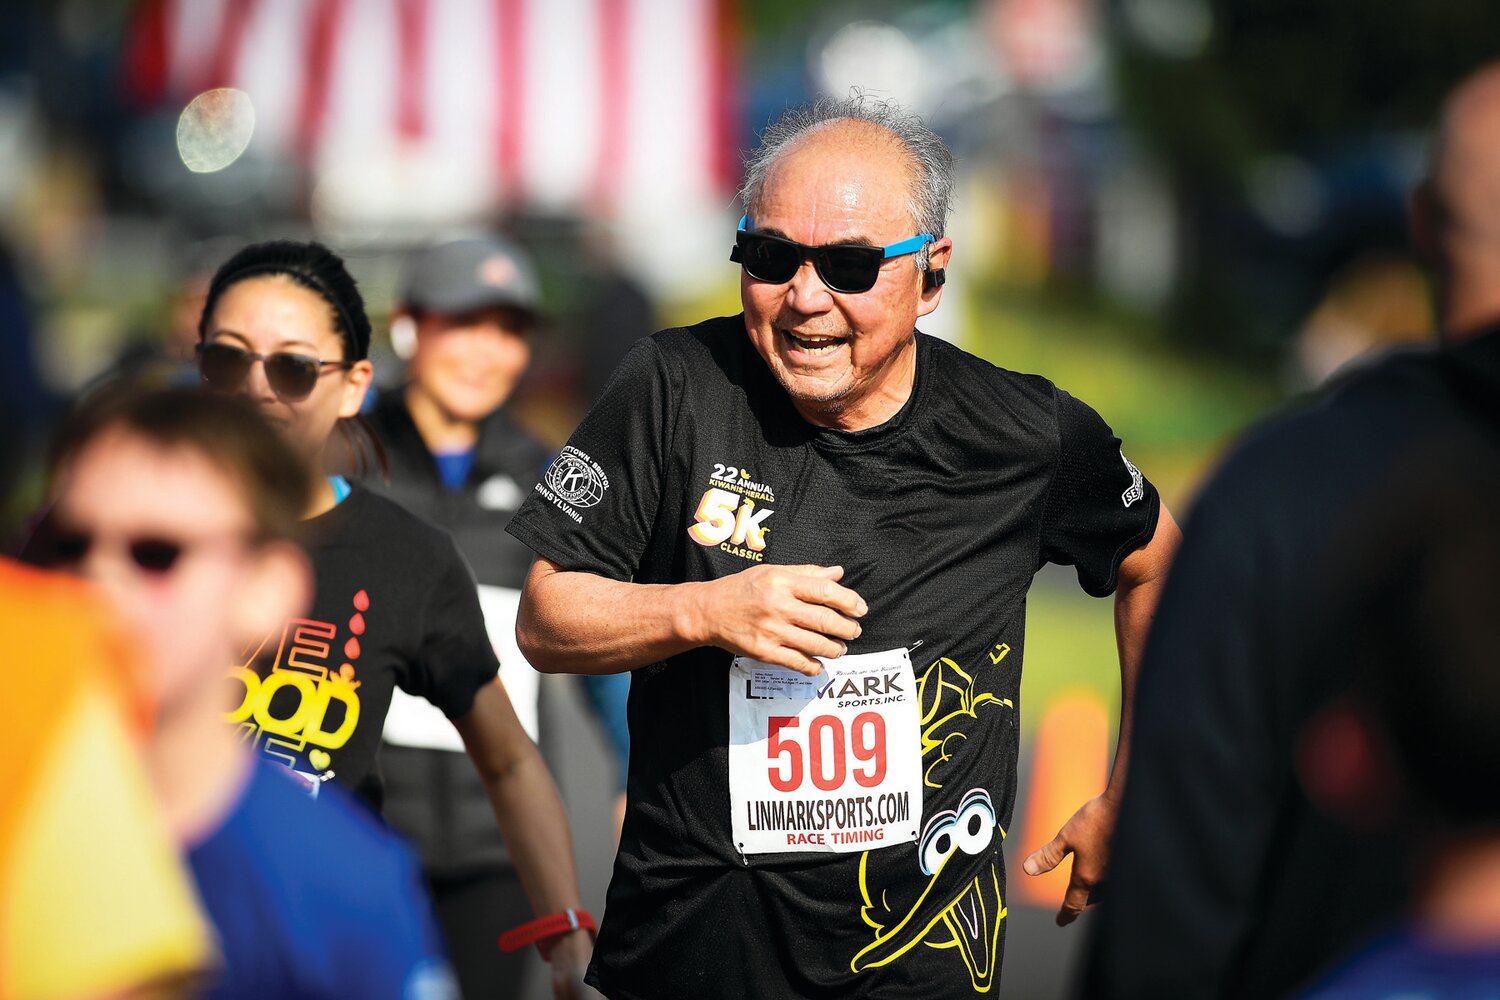 Robert Nakao, 68, of Newtown broke the 30-minute mark in the 5K.